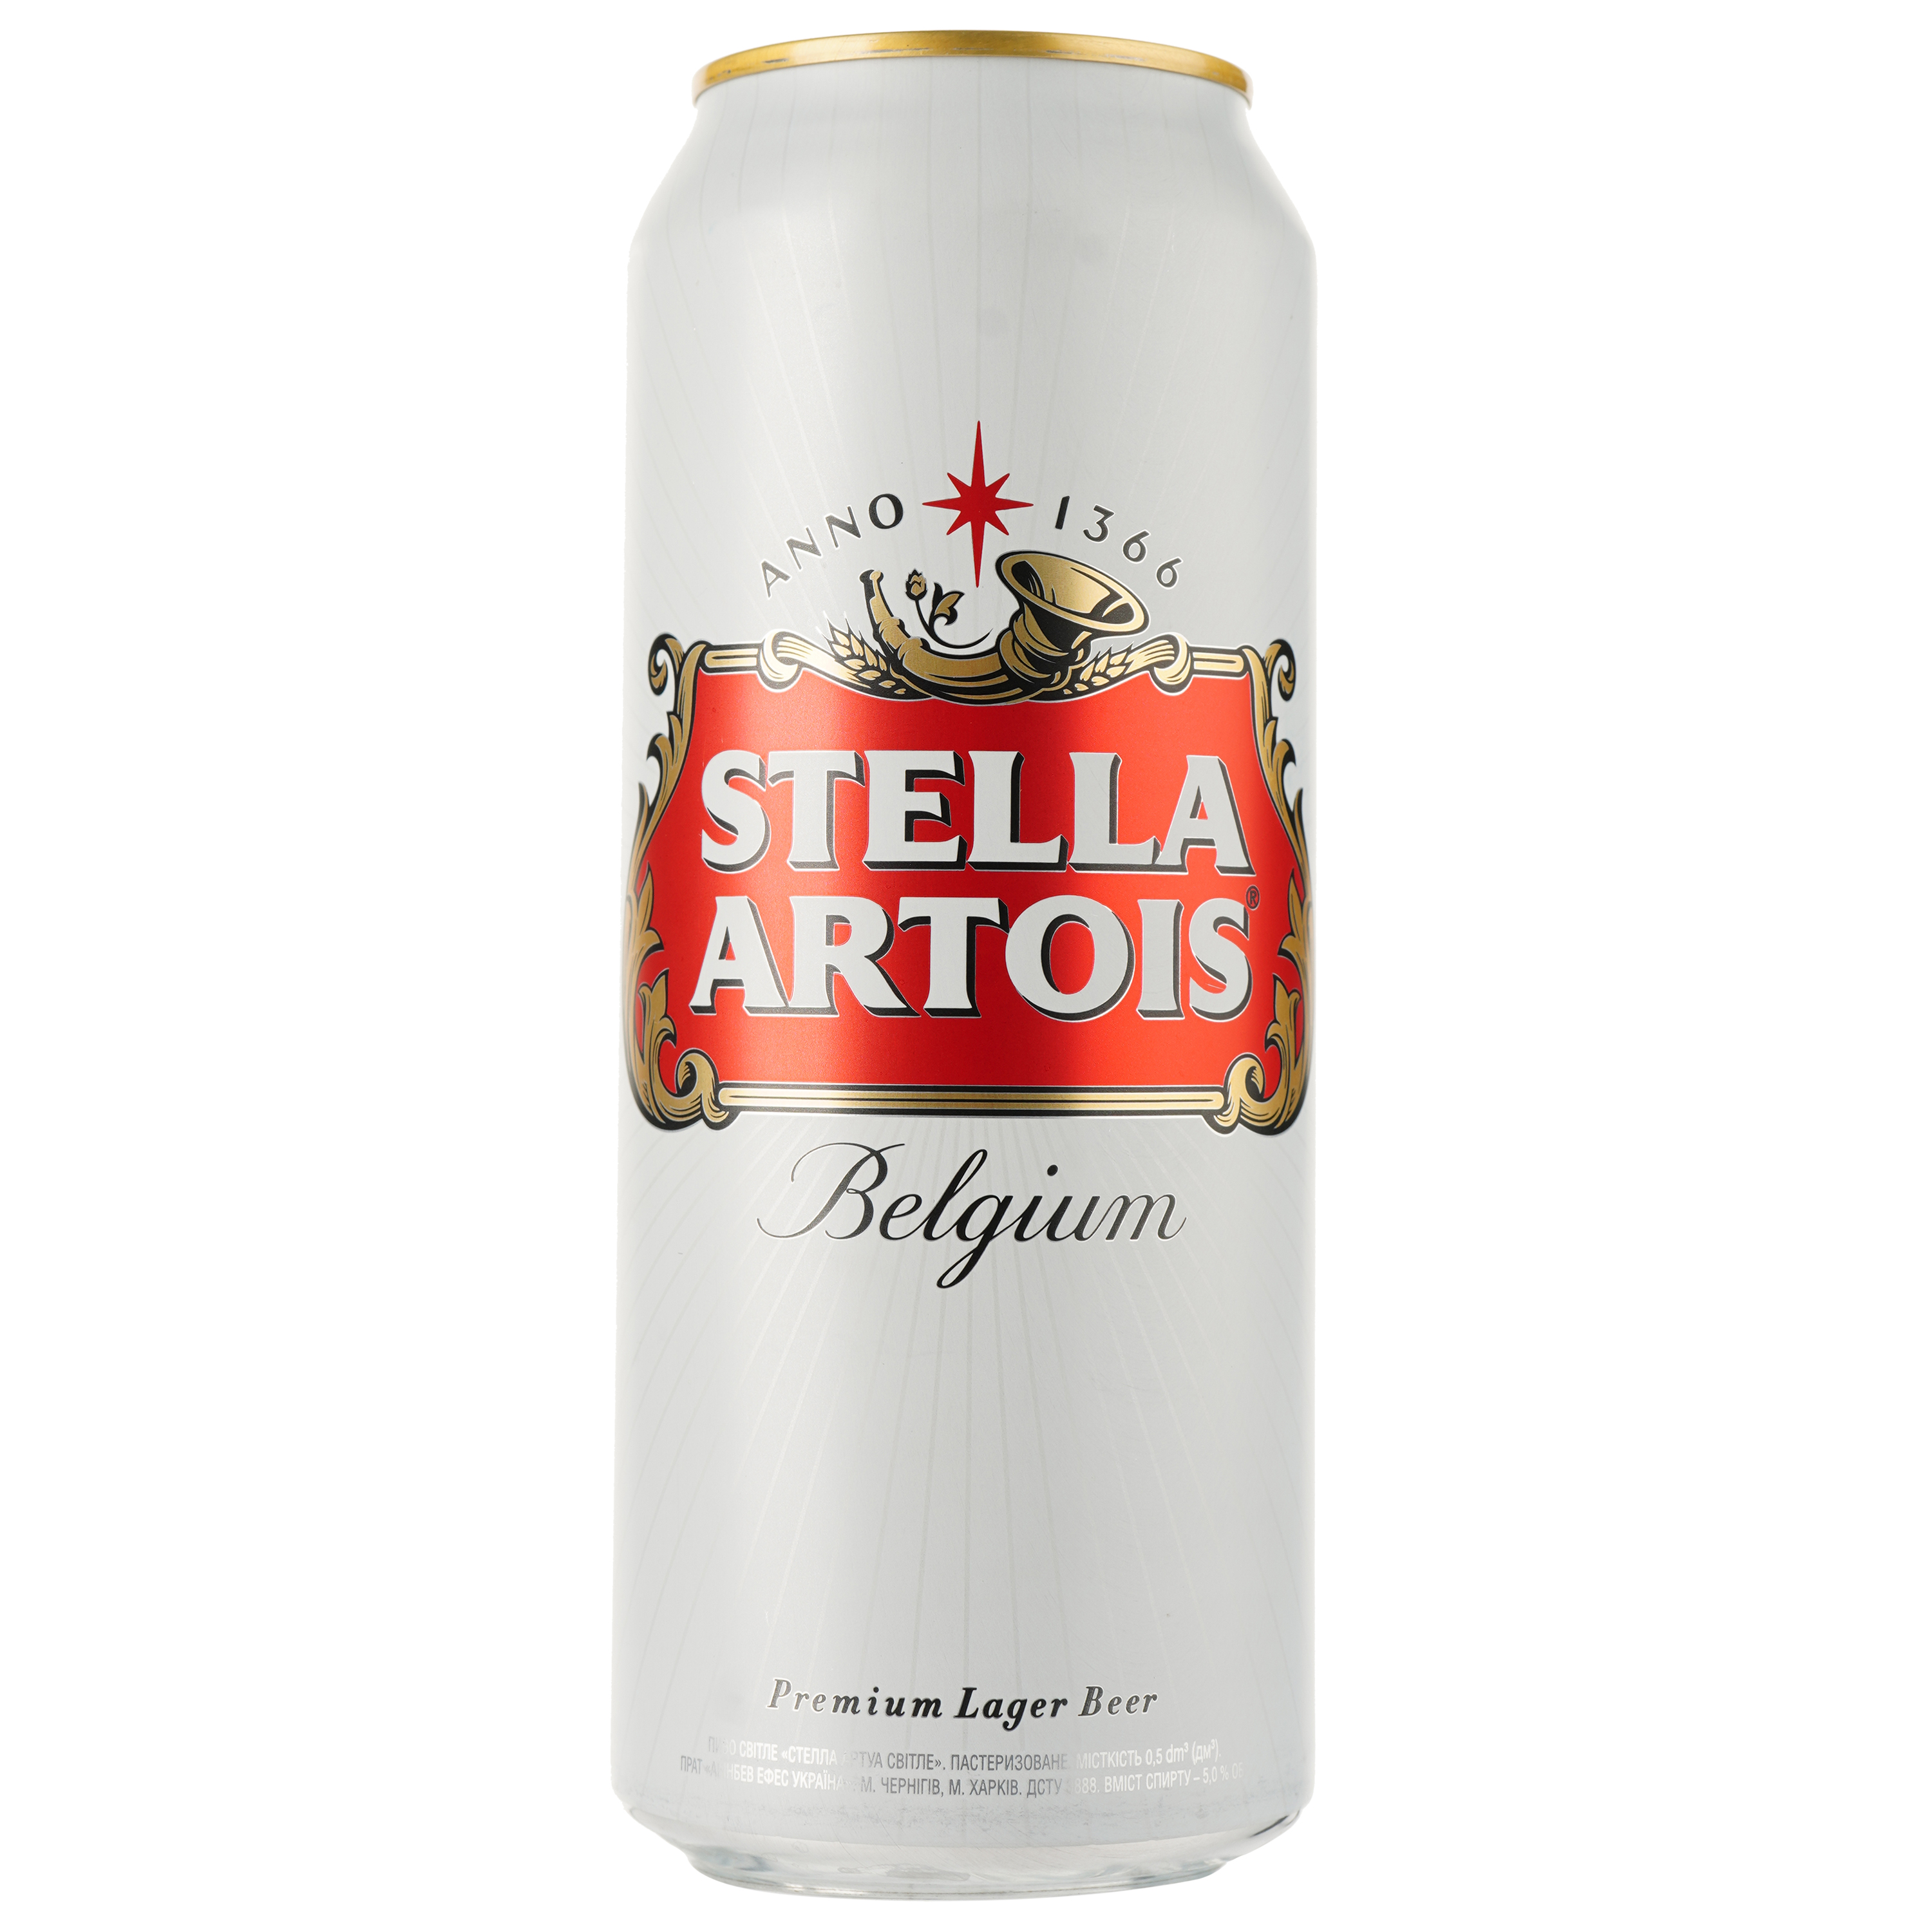 Пиво Stella Artois, светлое, 5%, ж/б, 0,5 л (64712) - фото 1